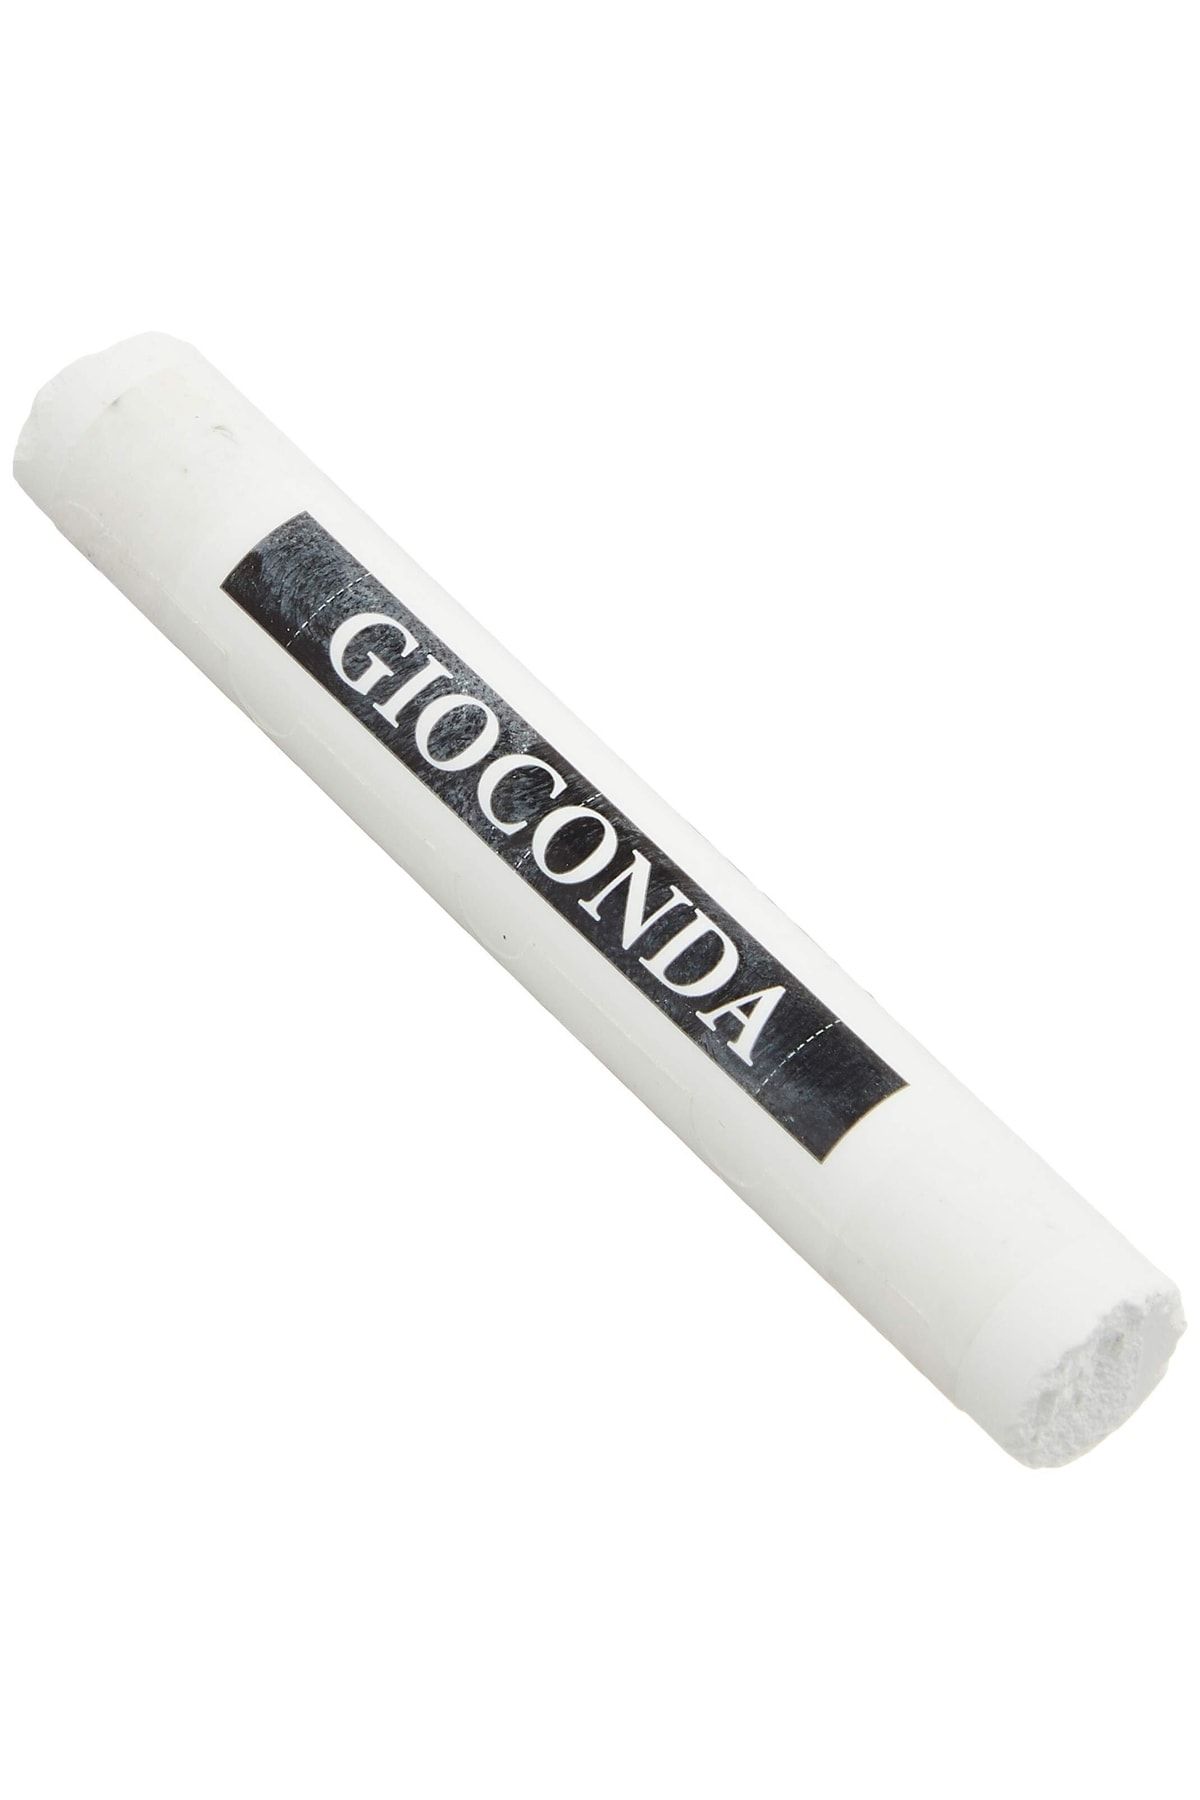 Kohinoor Koh I Noor Gioconda 8692/1 Extra Soft White Coal Füzen